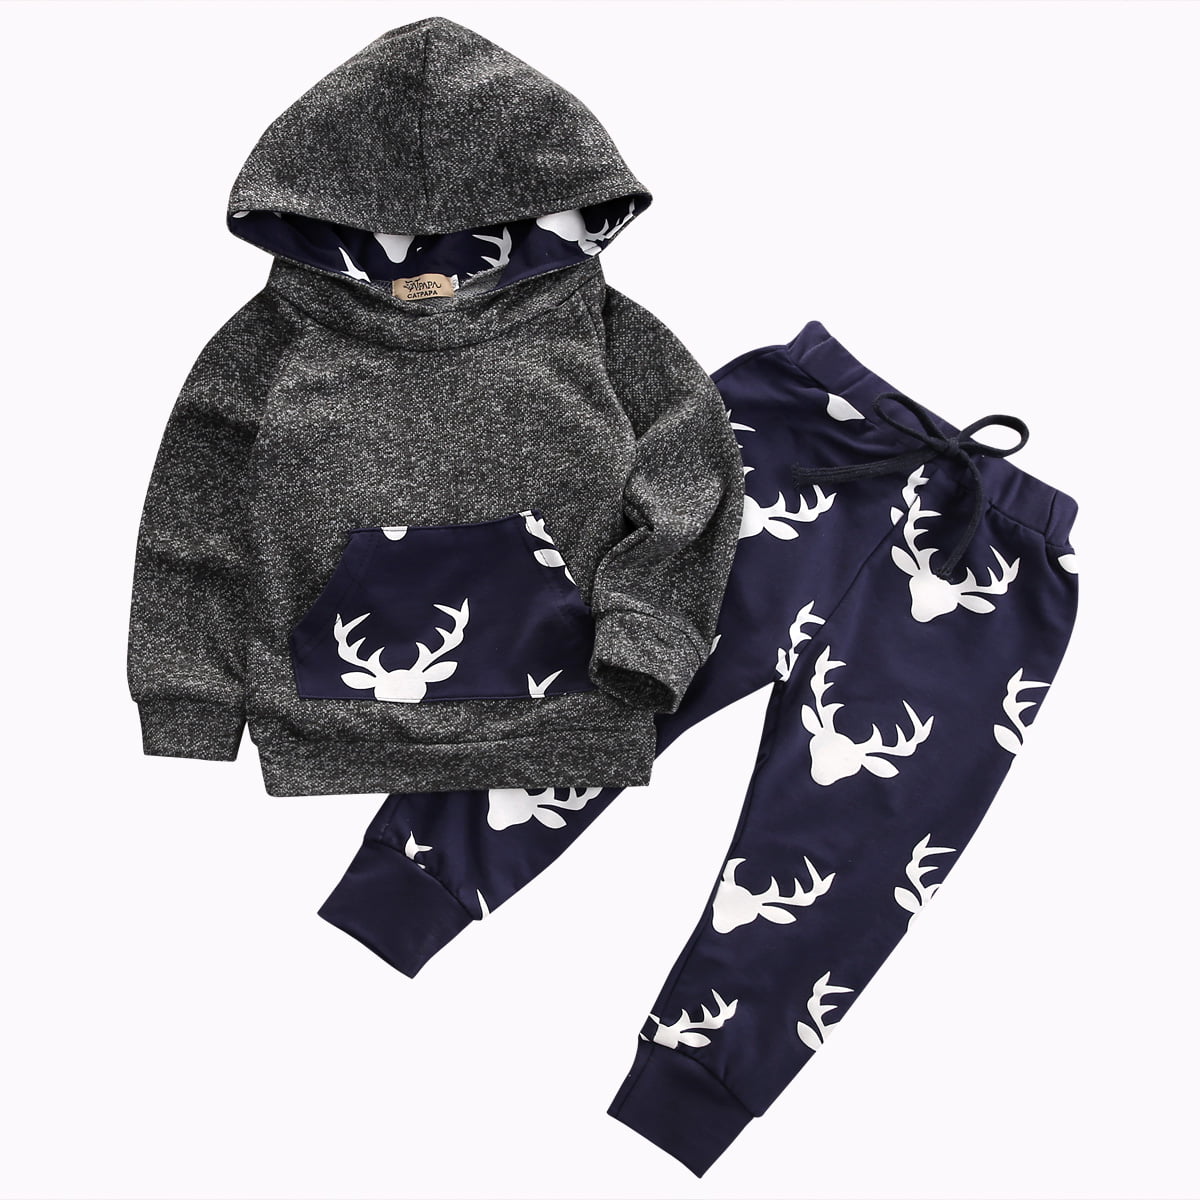 2PCS Newborn Baby Boy Girl Deer Print Hooded Shirts Tops+Pants Xmas Outfits Set 